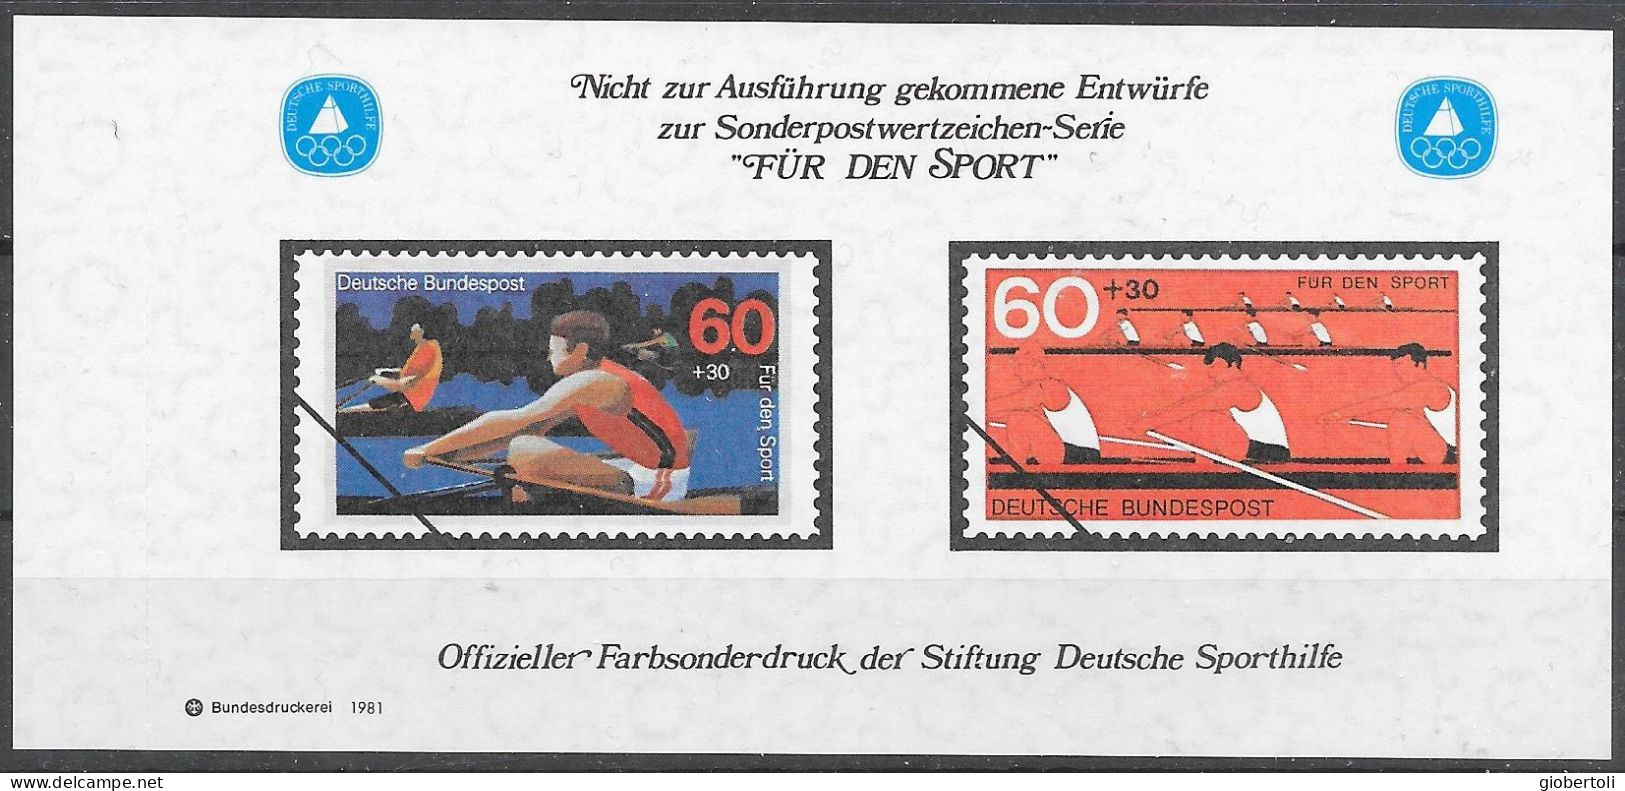 Germania/Germany/Allemagne: Bozzetti Non Adottati, Sketches Not Adopted, Croquis Non Adoptés, Per Lo Sport, For Sport, - Remo